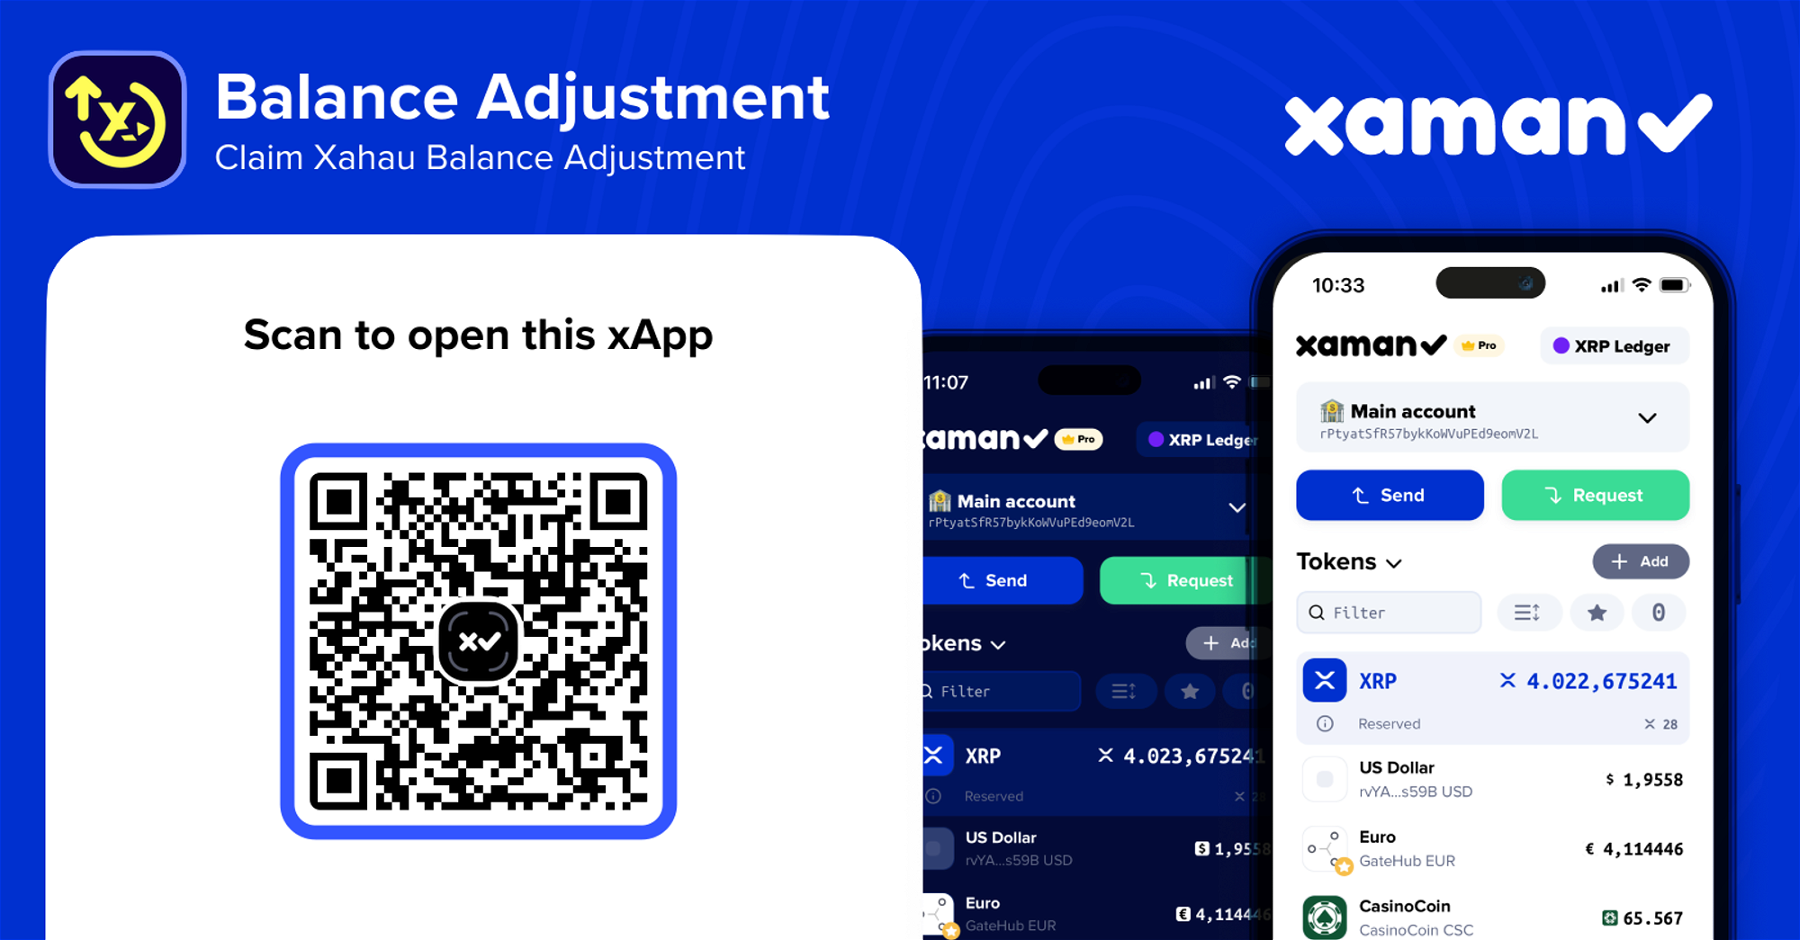 Open Xumm xApp: Balance Adjustment